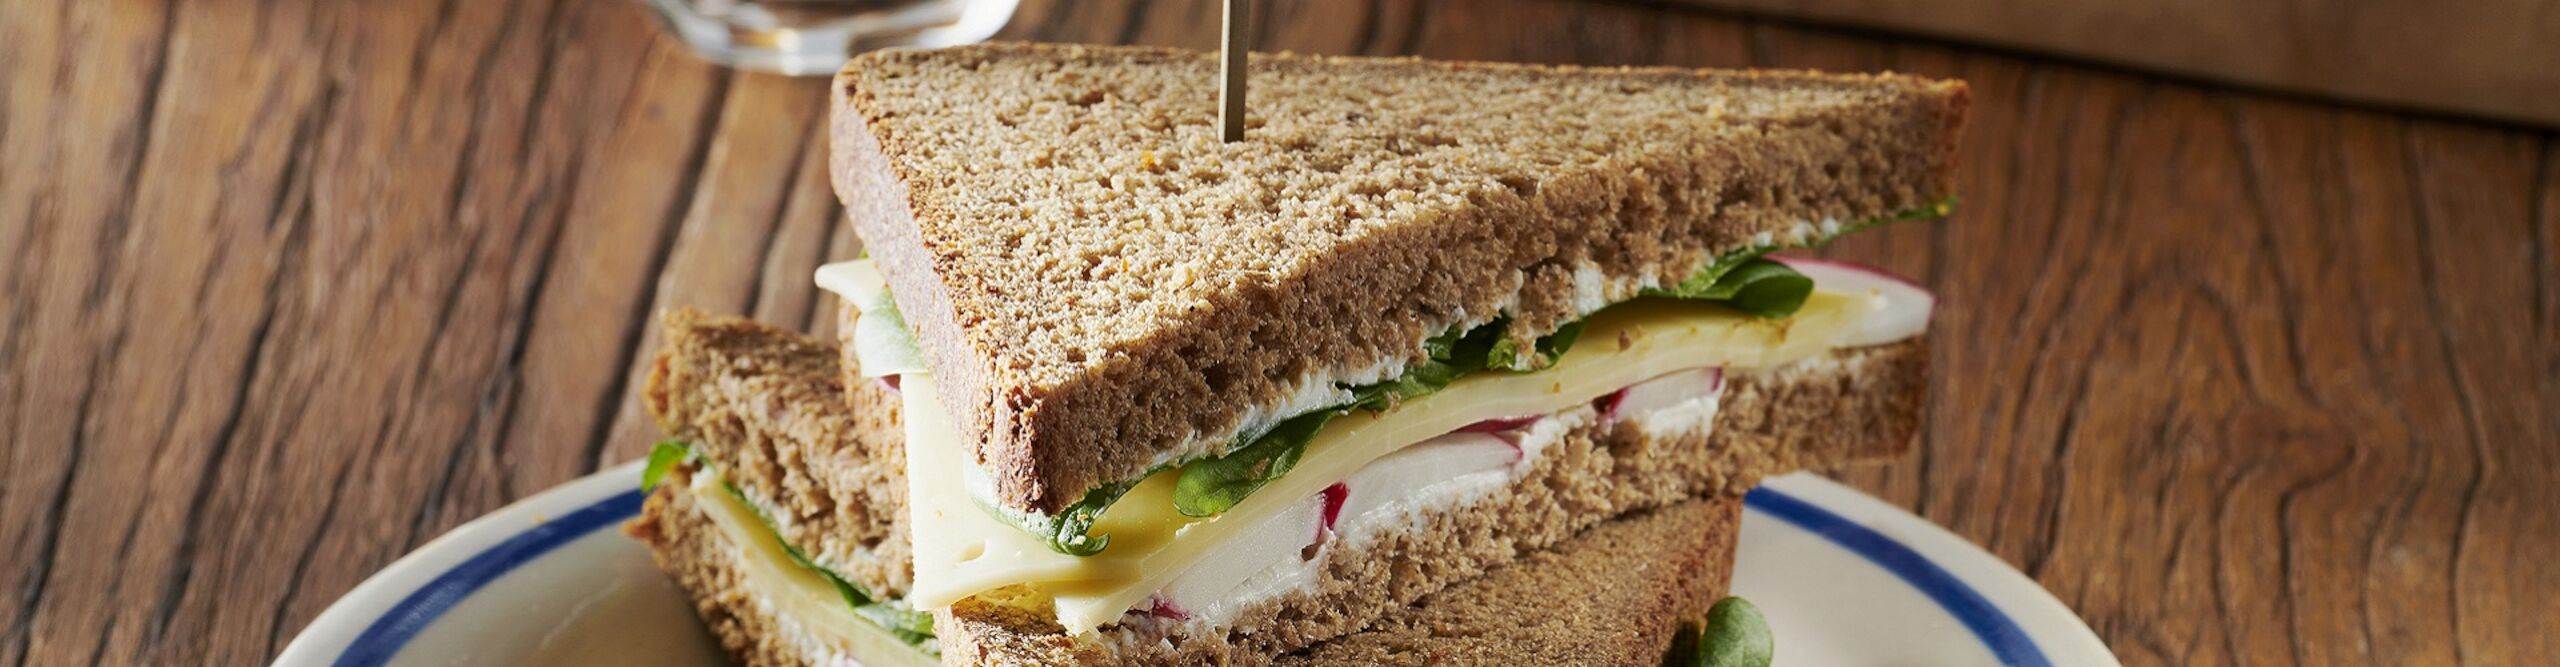 1920x500-sandwich-tummat-viipaleet